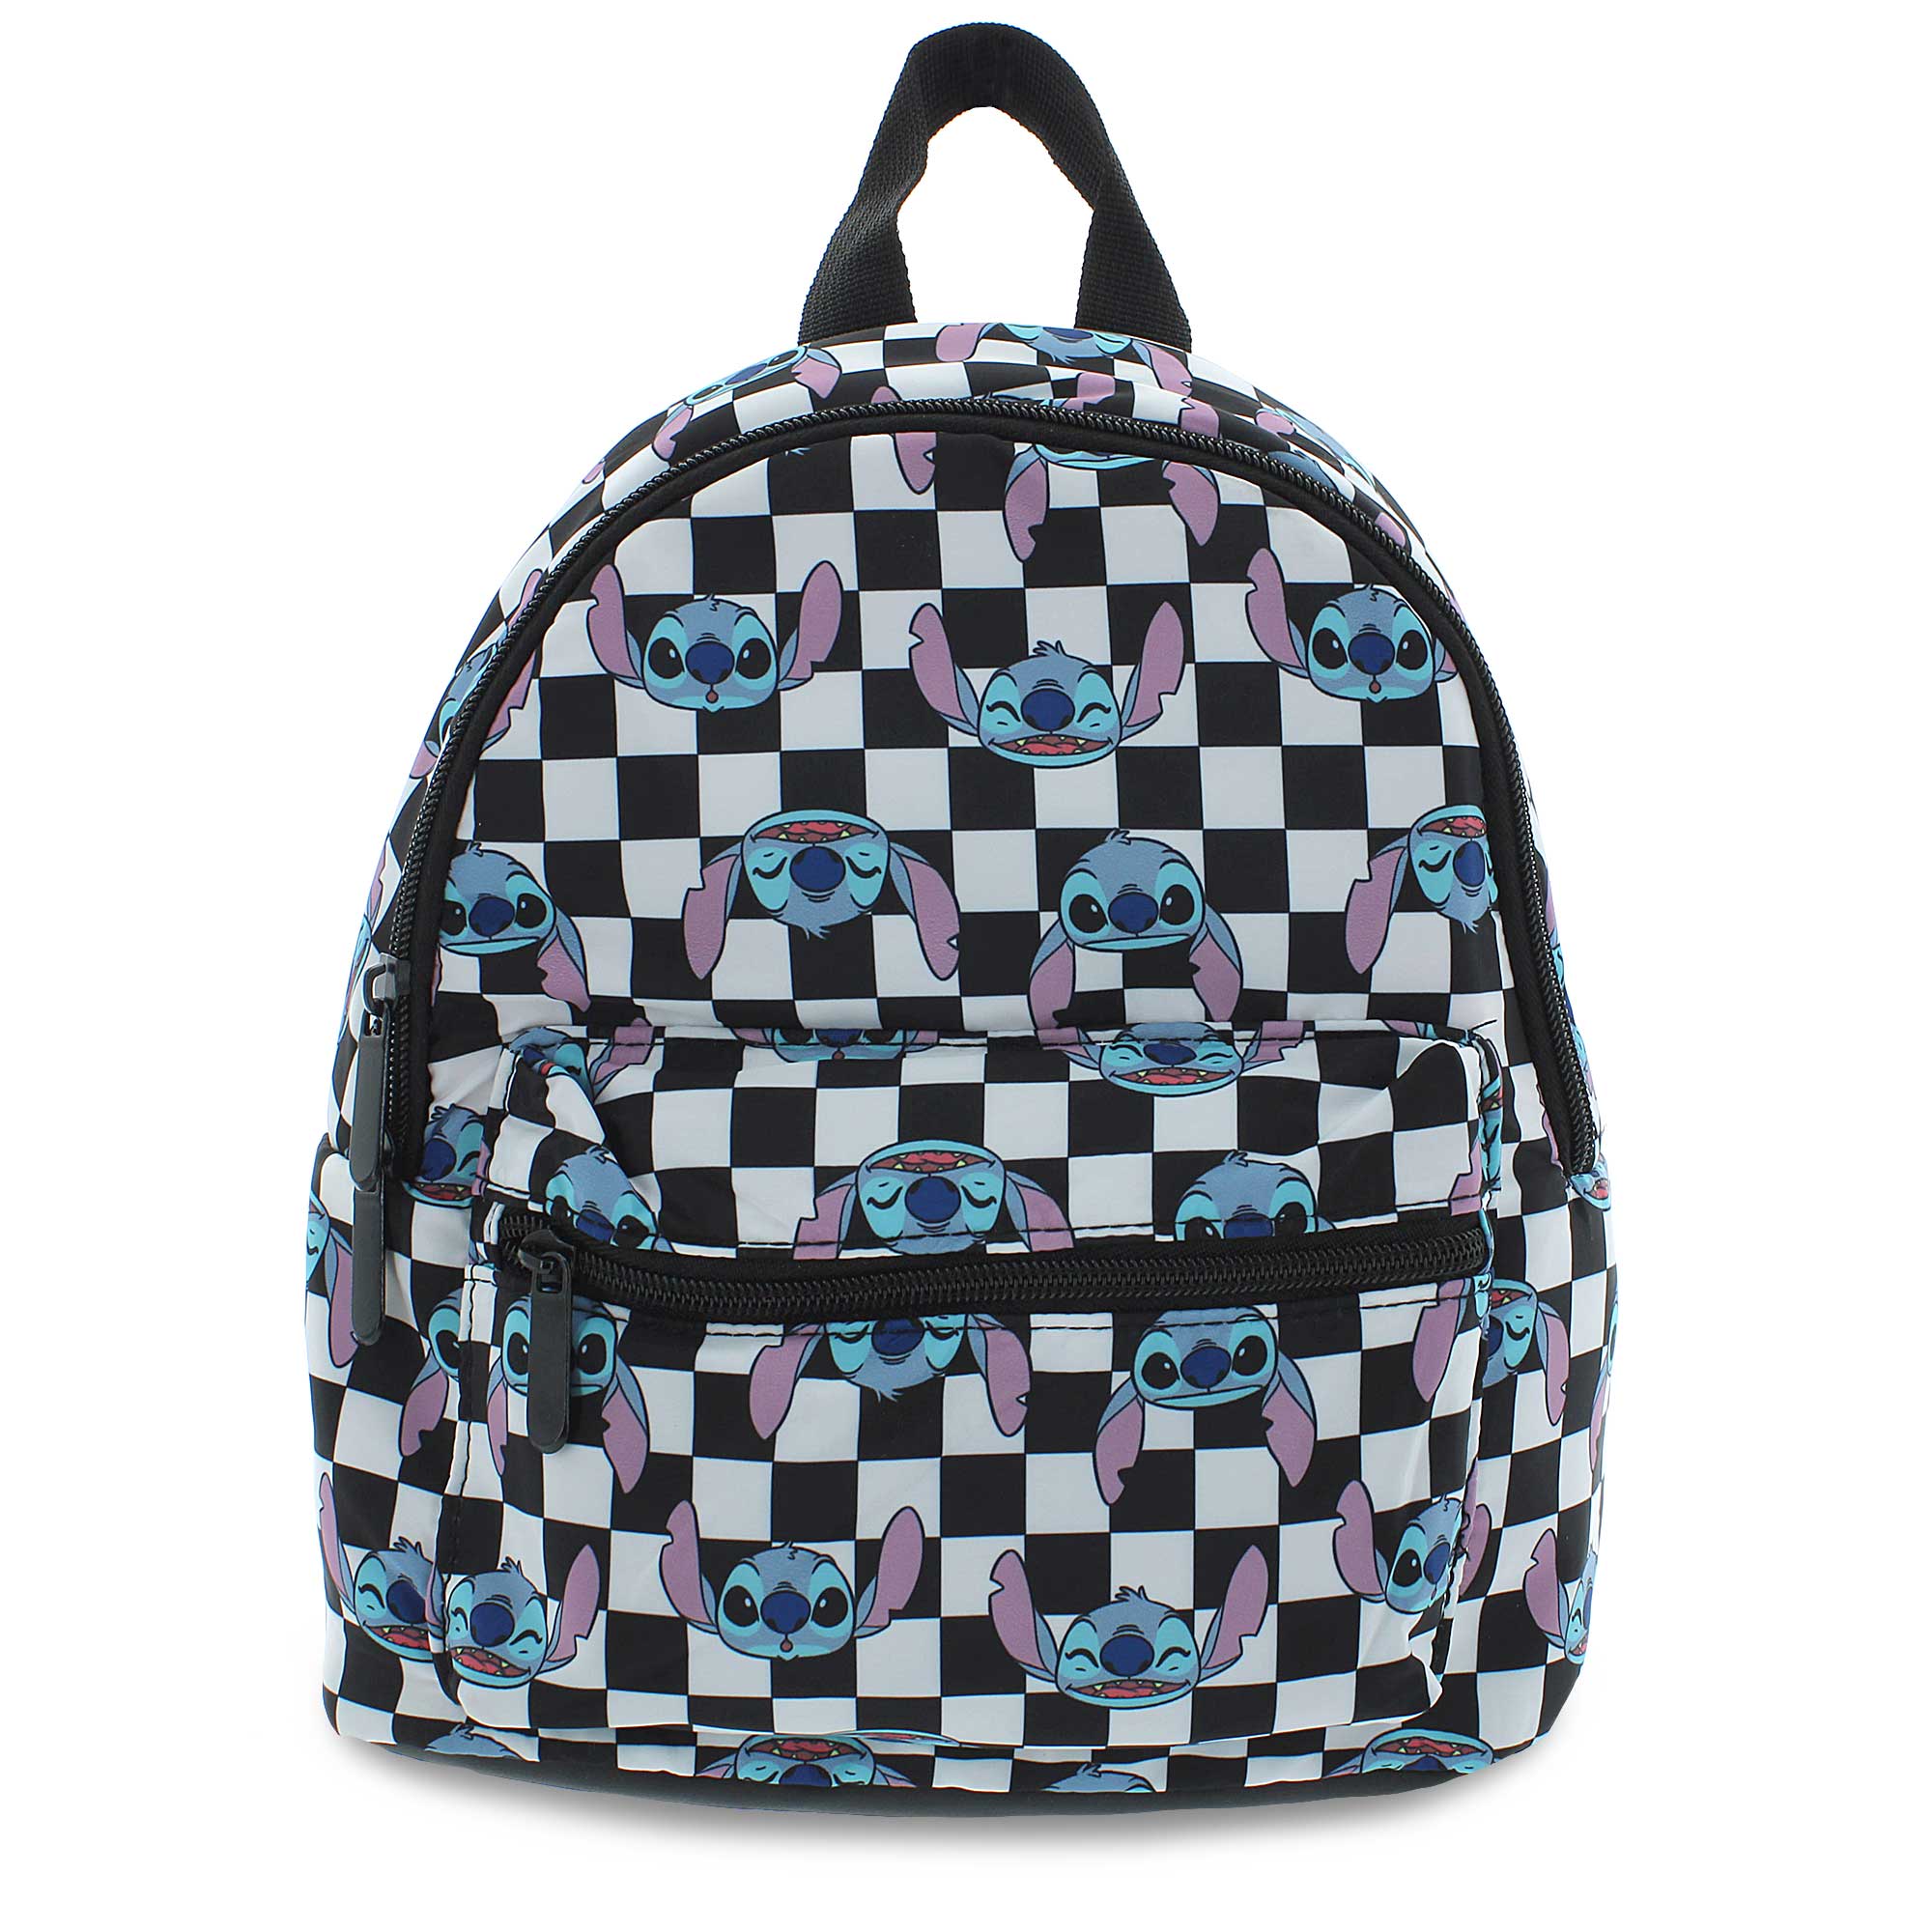 Disney Stitch Mini Backpack